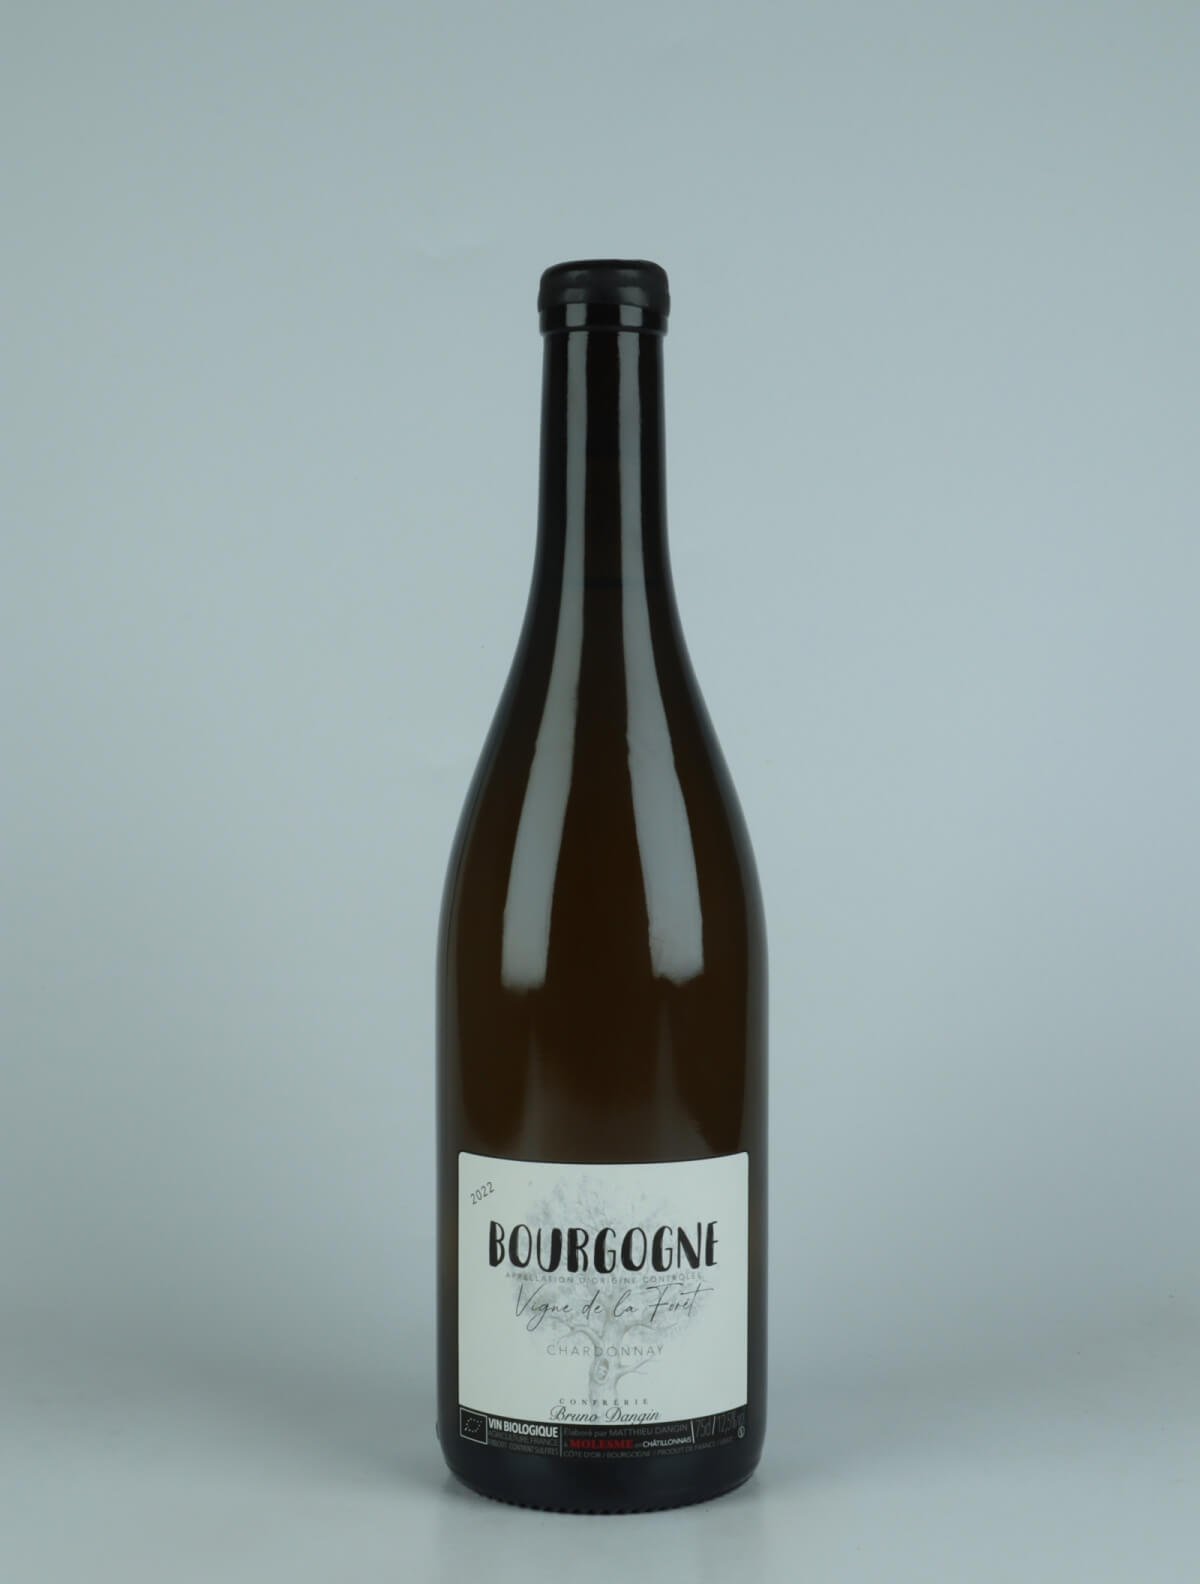 A bottle 2022 Bourgogne Blanc - Vigne de la Forêt White wine from Domaine Bruno Dangin, Burgundy in France